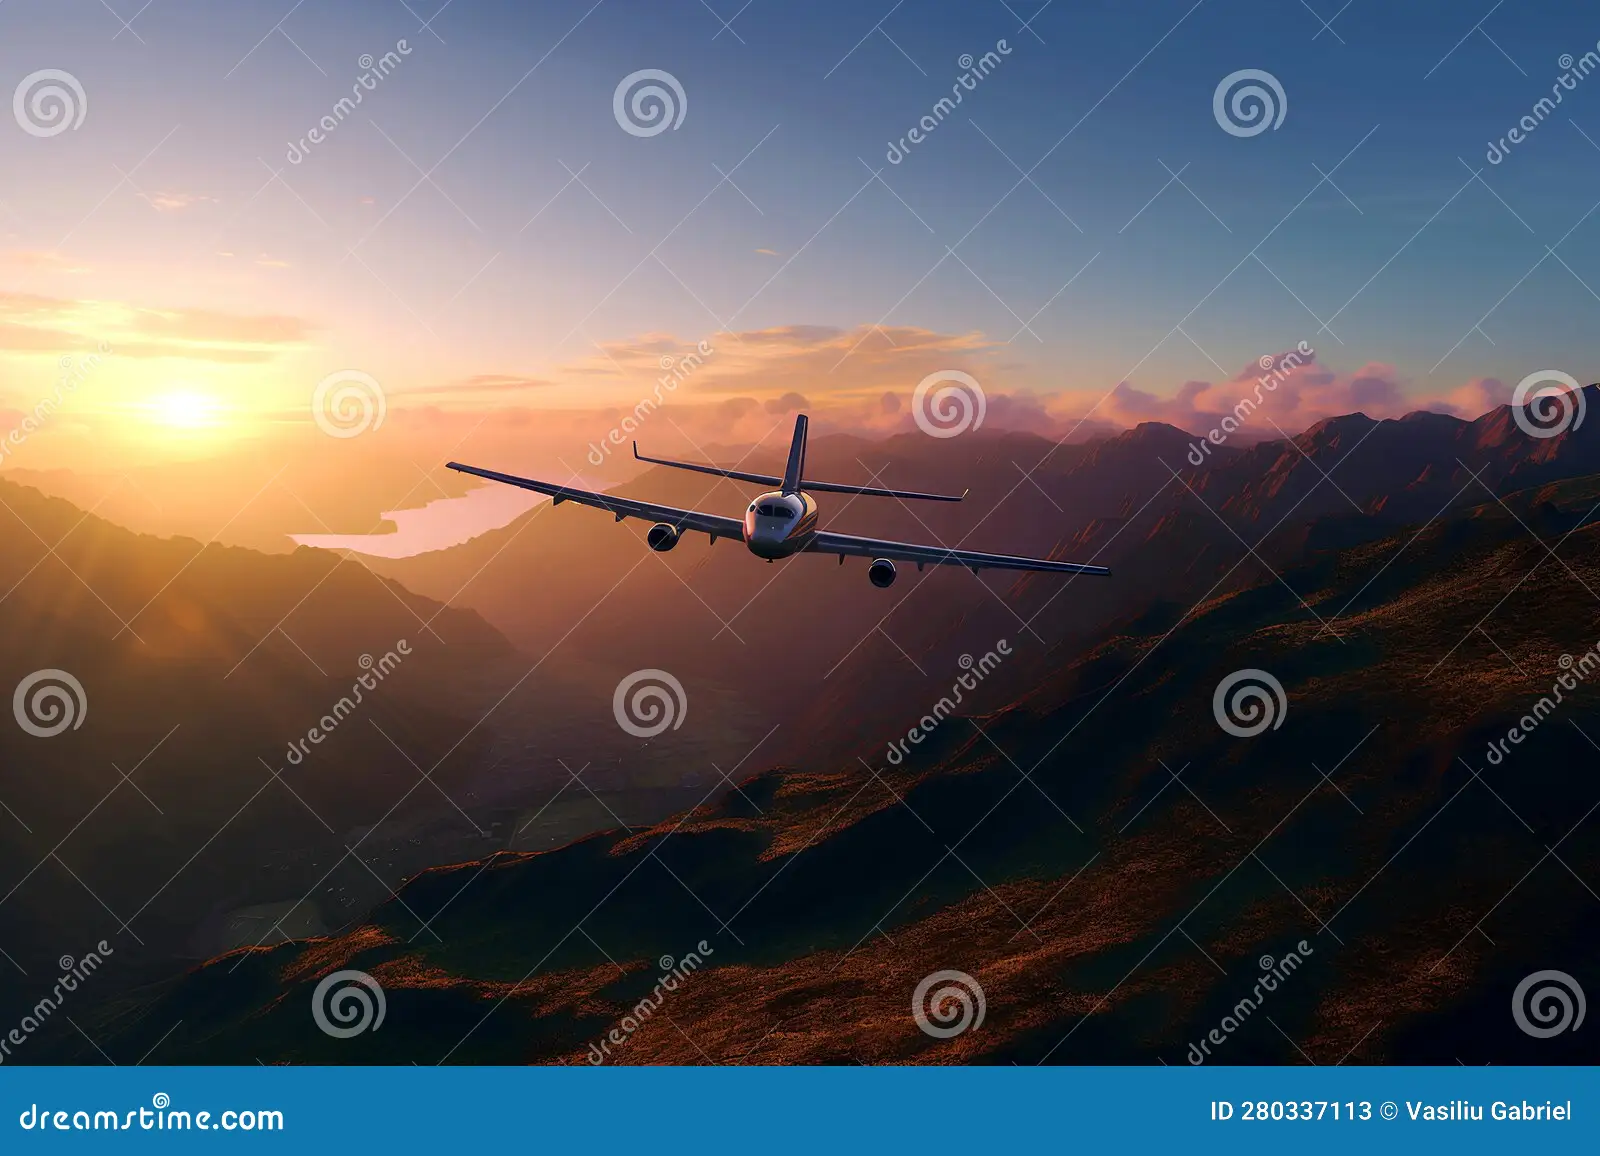 airplane taking off at sunset, dark blue sky